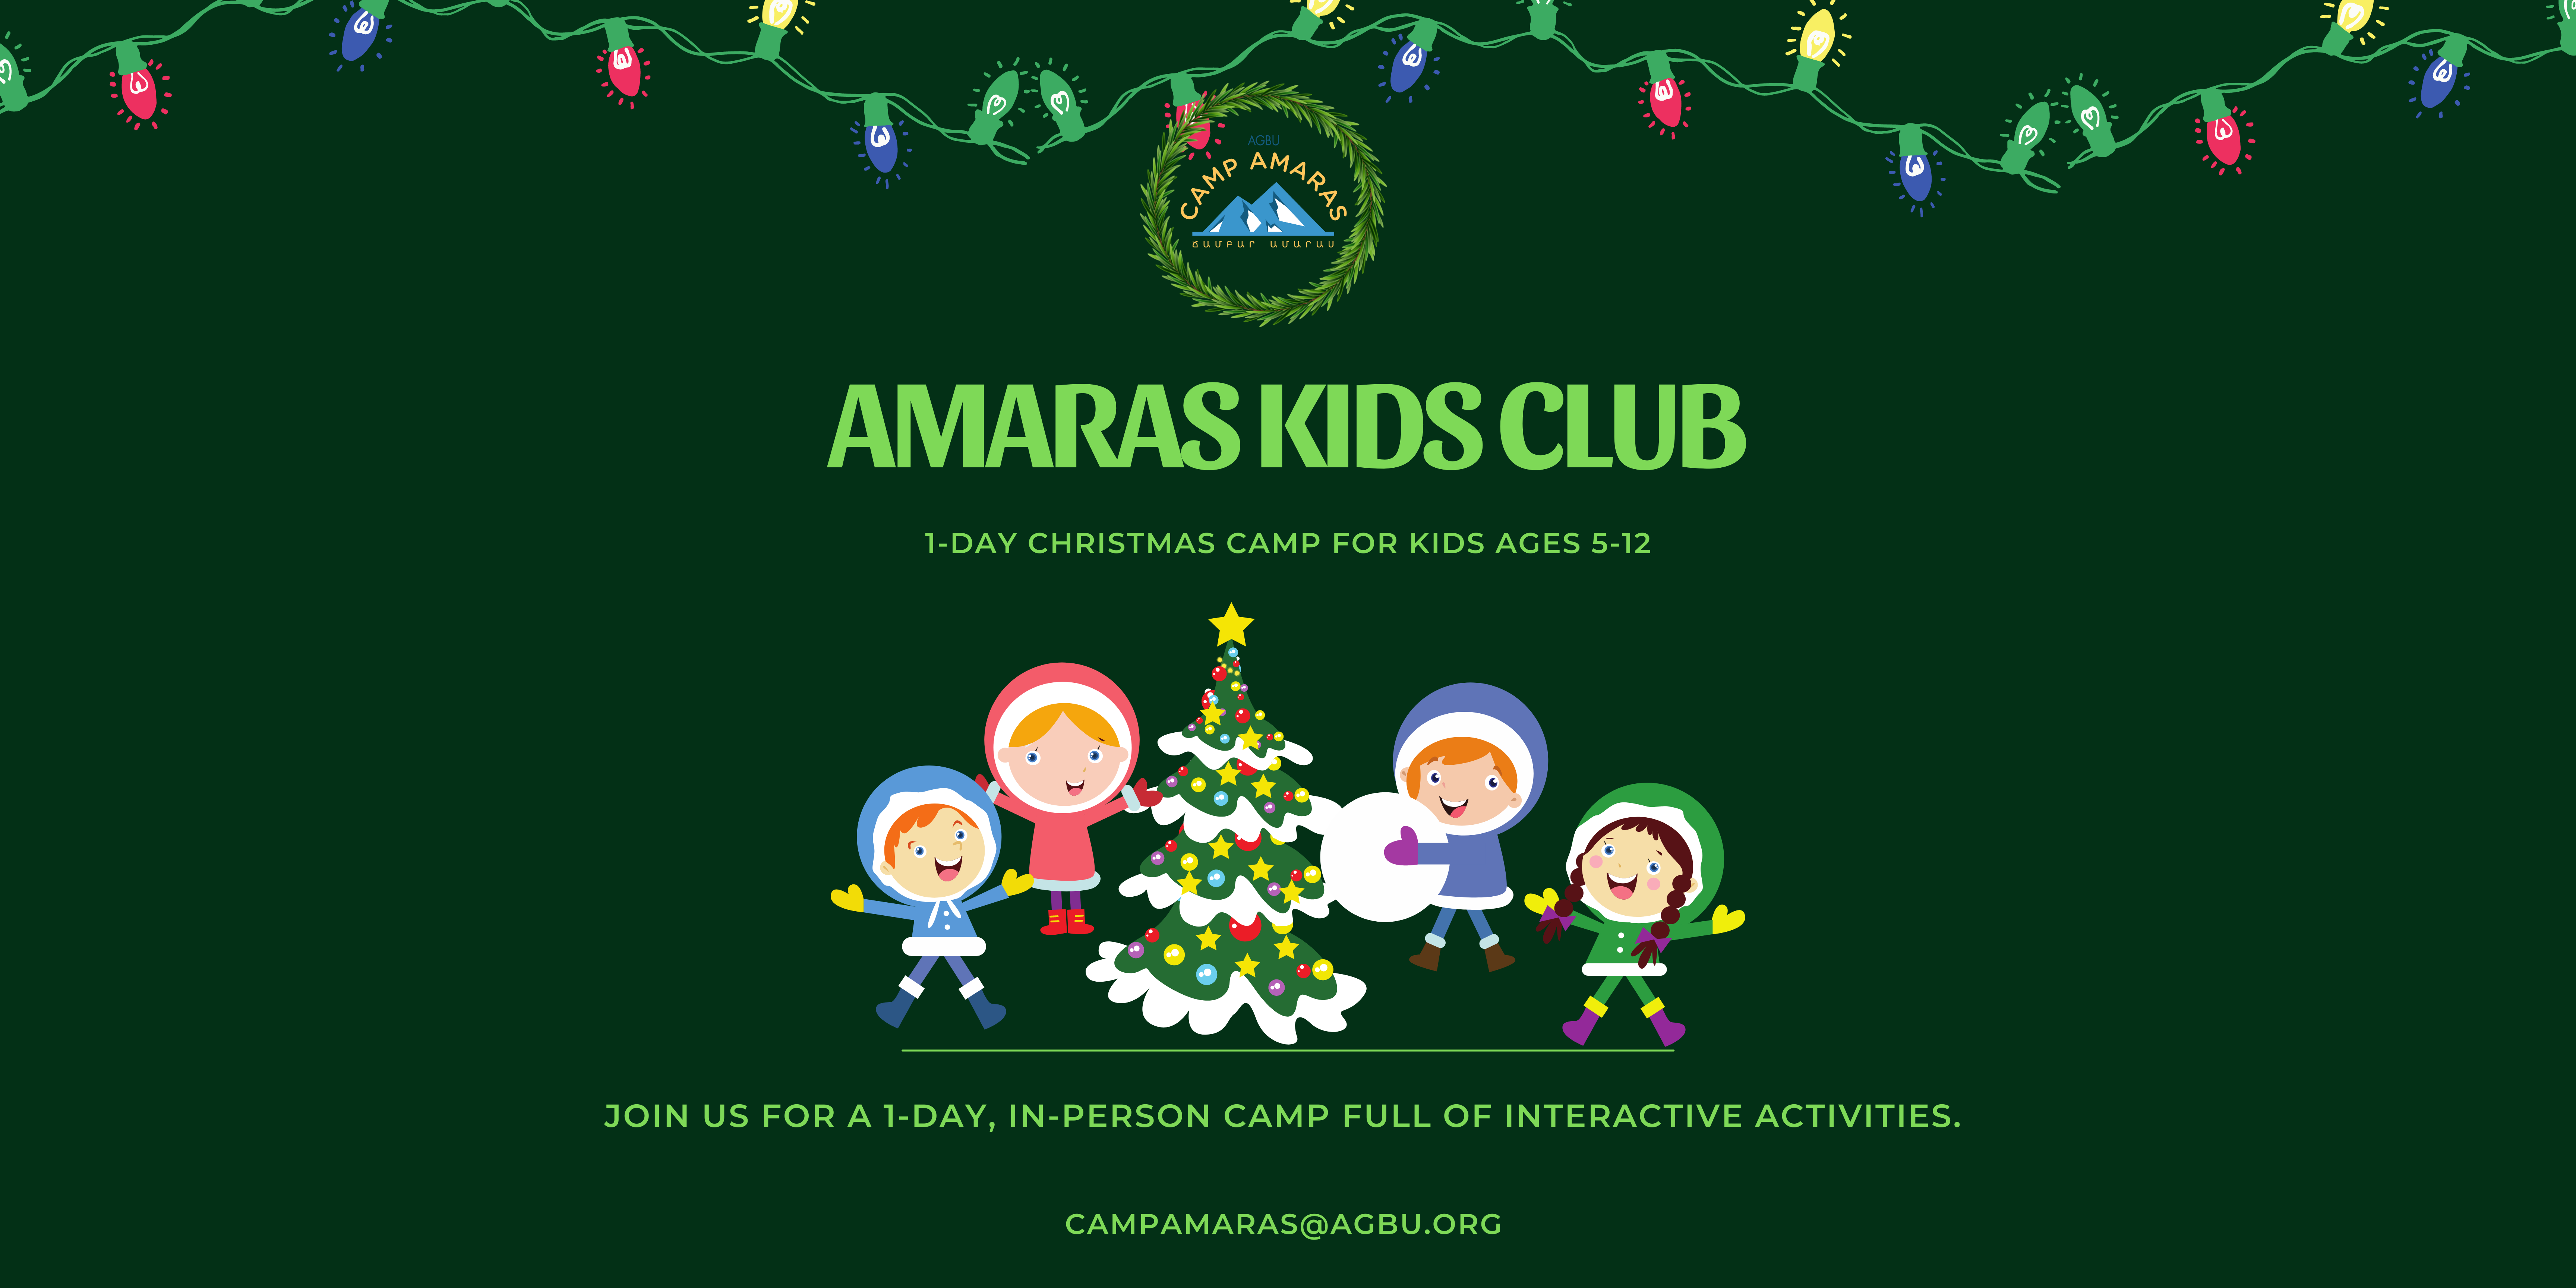 Amaras Kids Club- 1-Day Christmas Camp